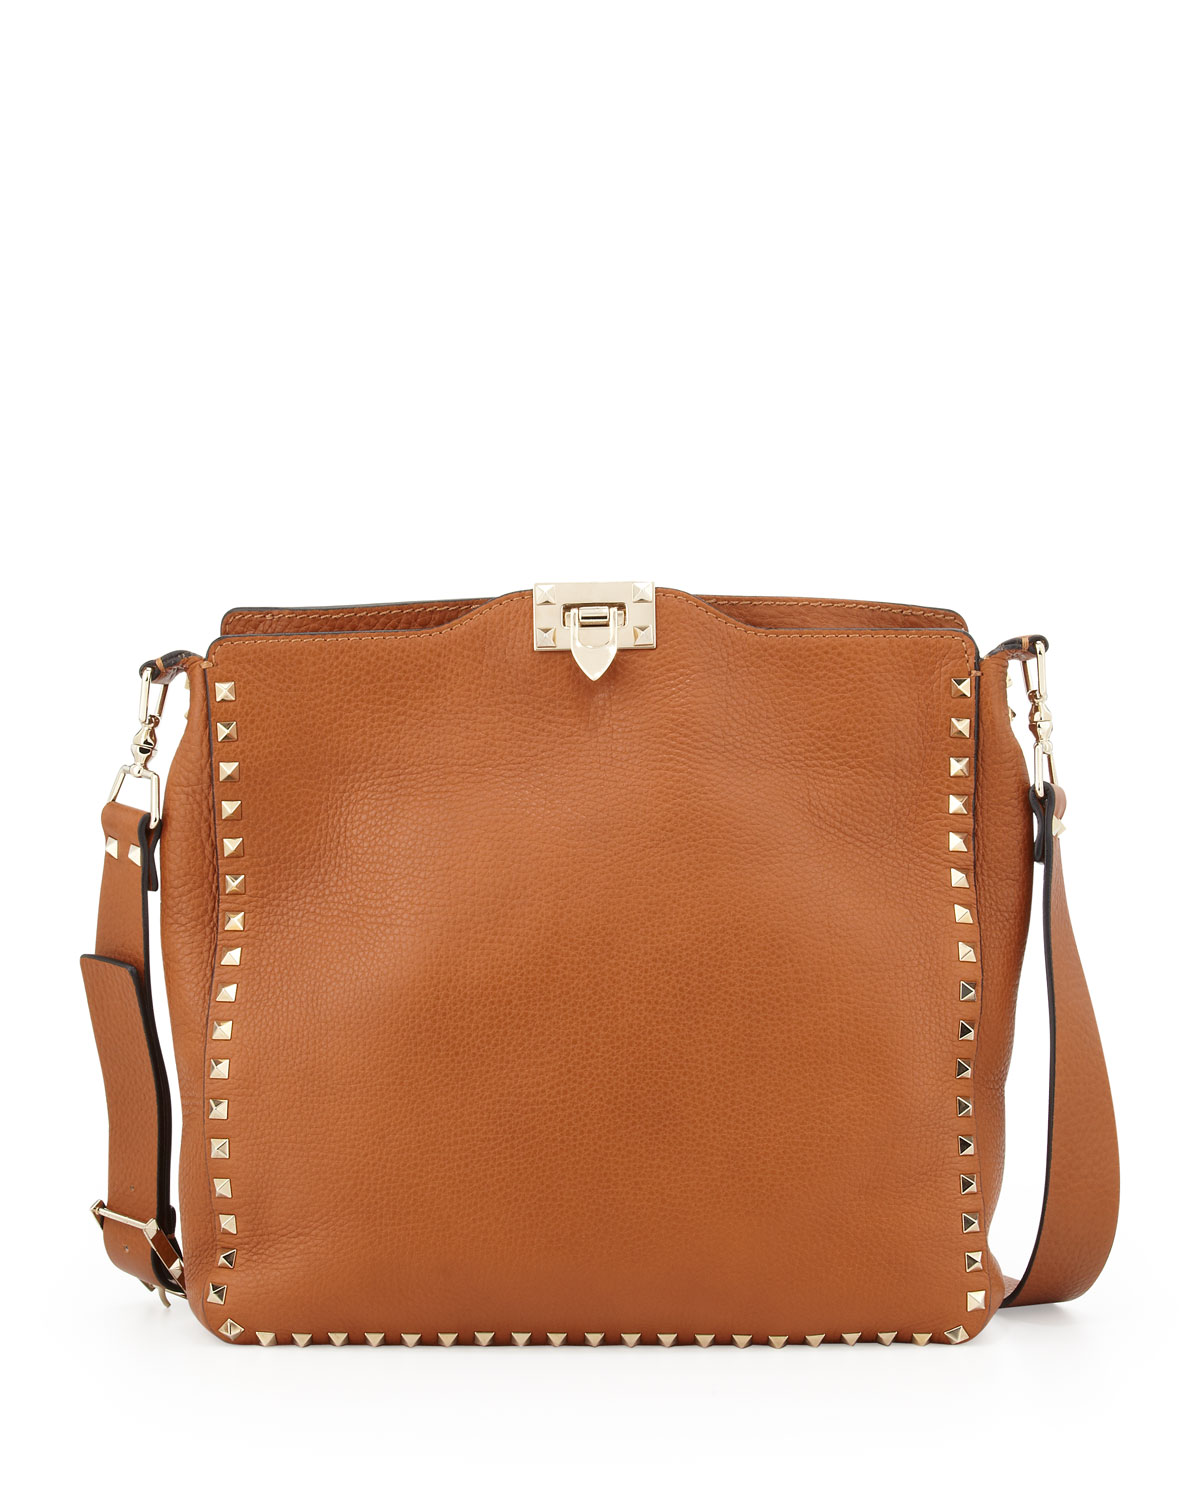 Lyst - Valentino Rockstud Medium Flip-lock Hobo Bag in Brown